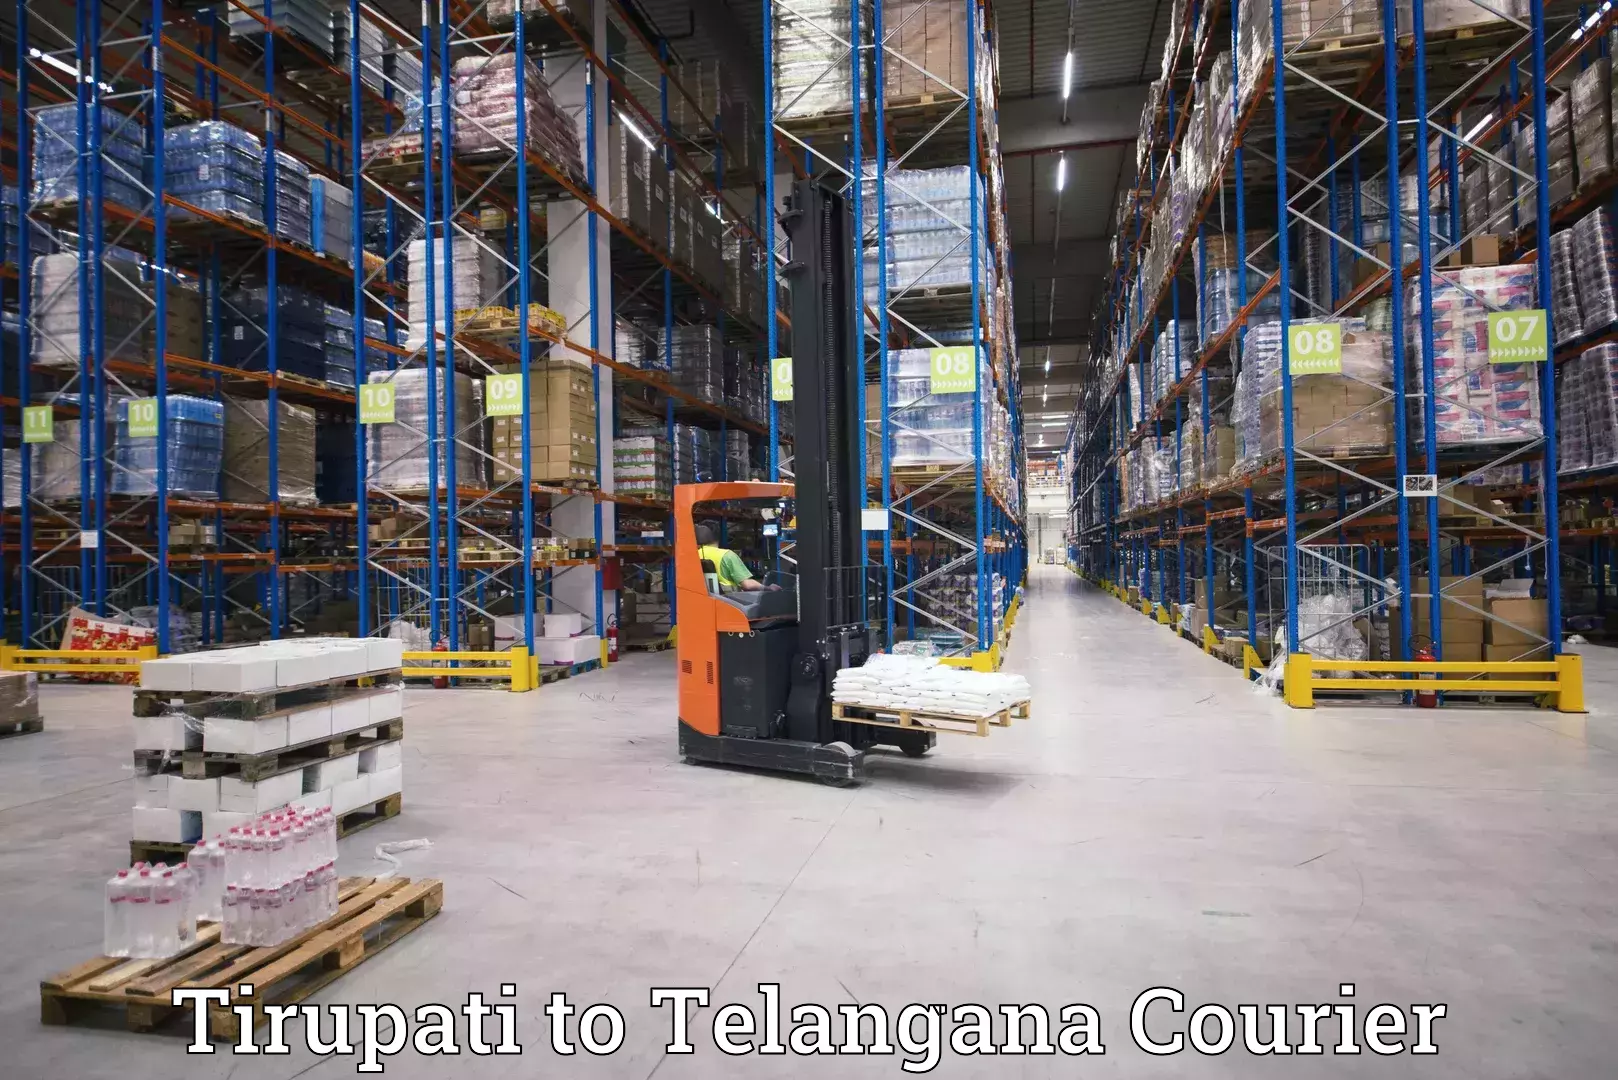 Express courier capabilities in Tirupati to Mahabubnagar